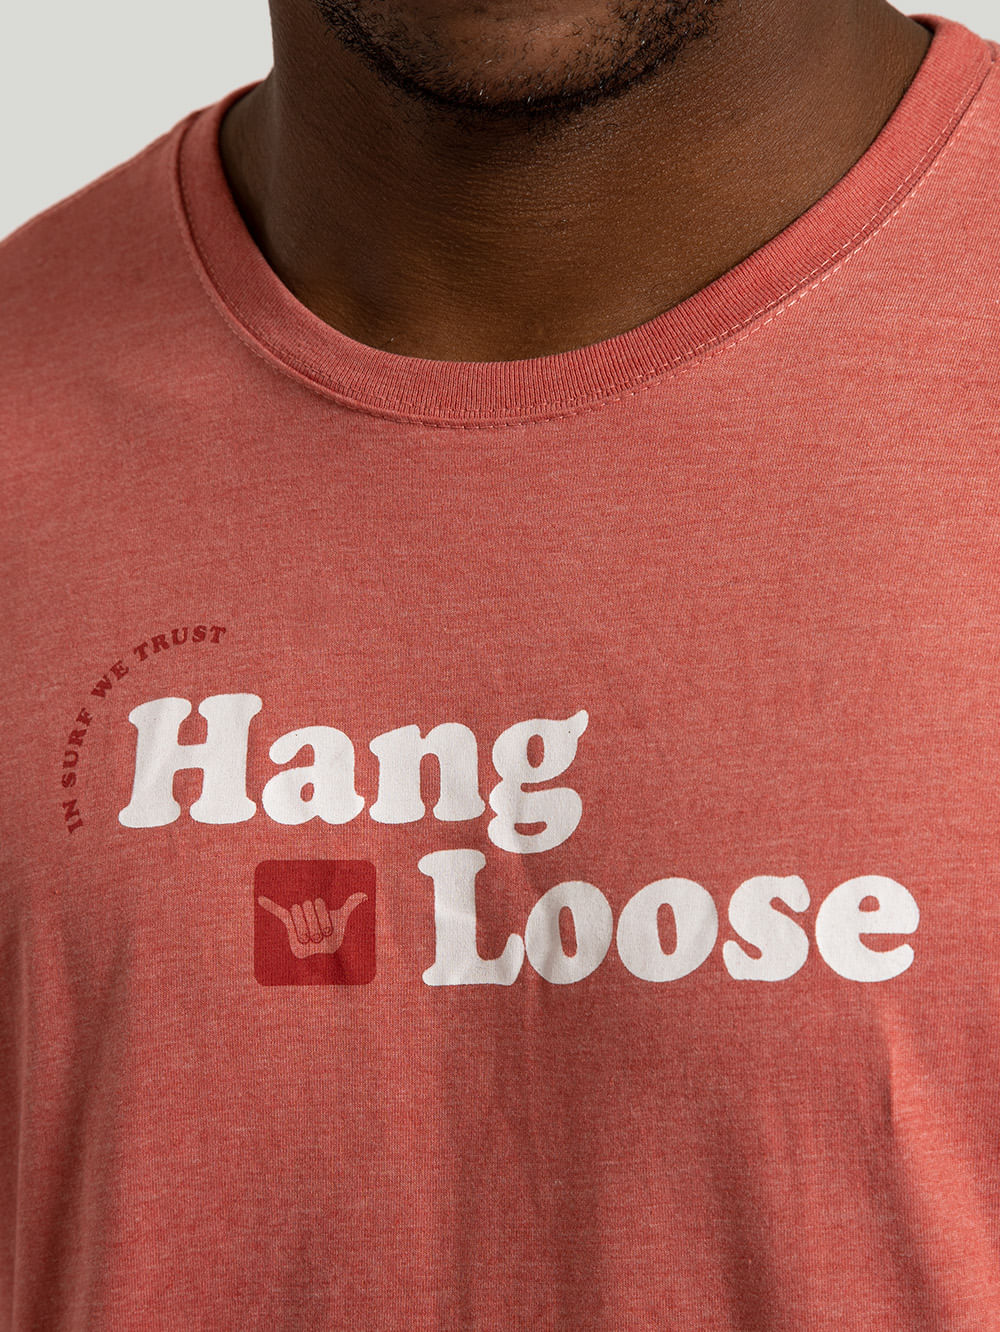 Camiseta Hang Loose Round Vermelha